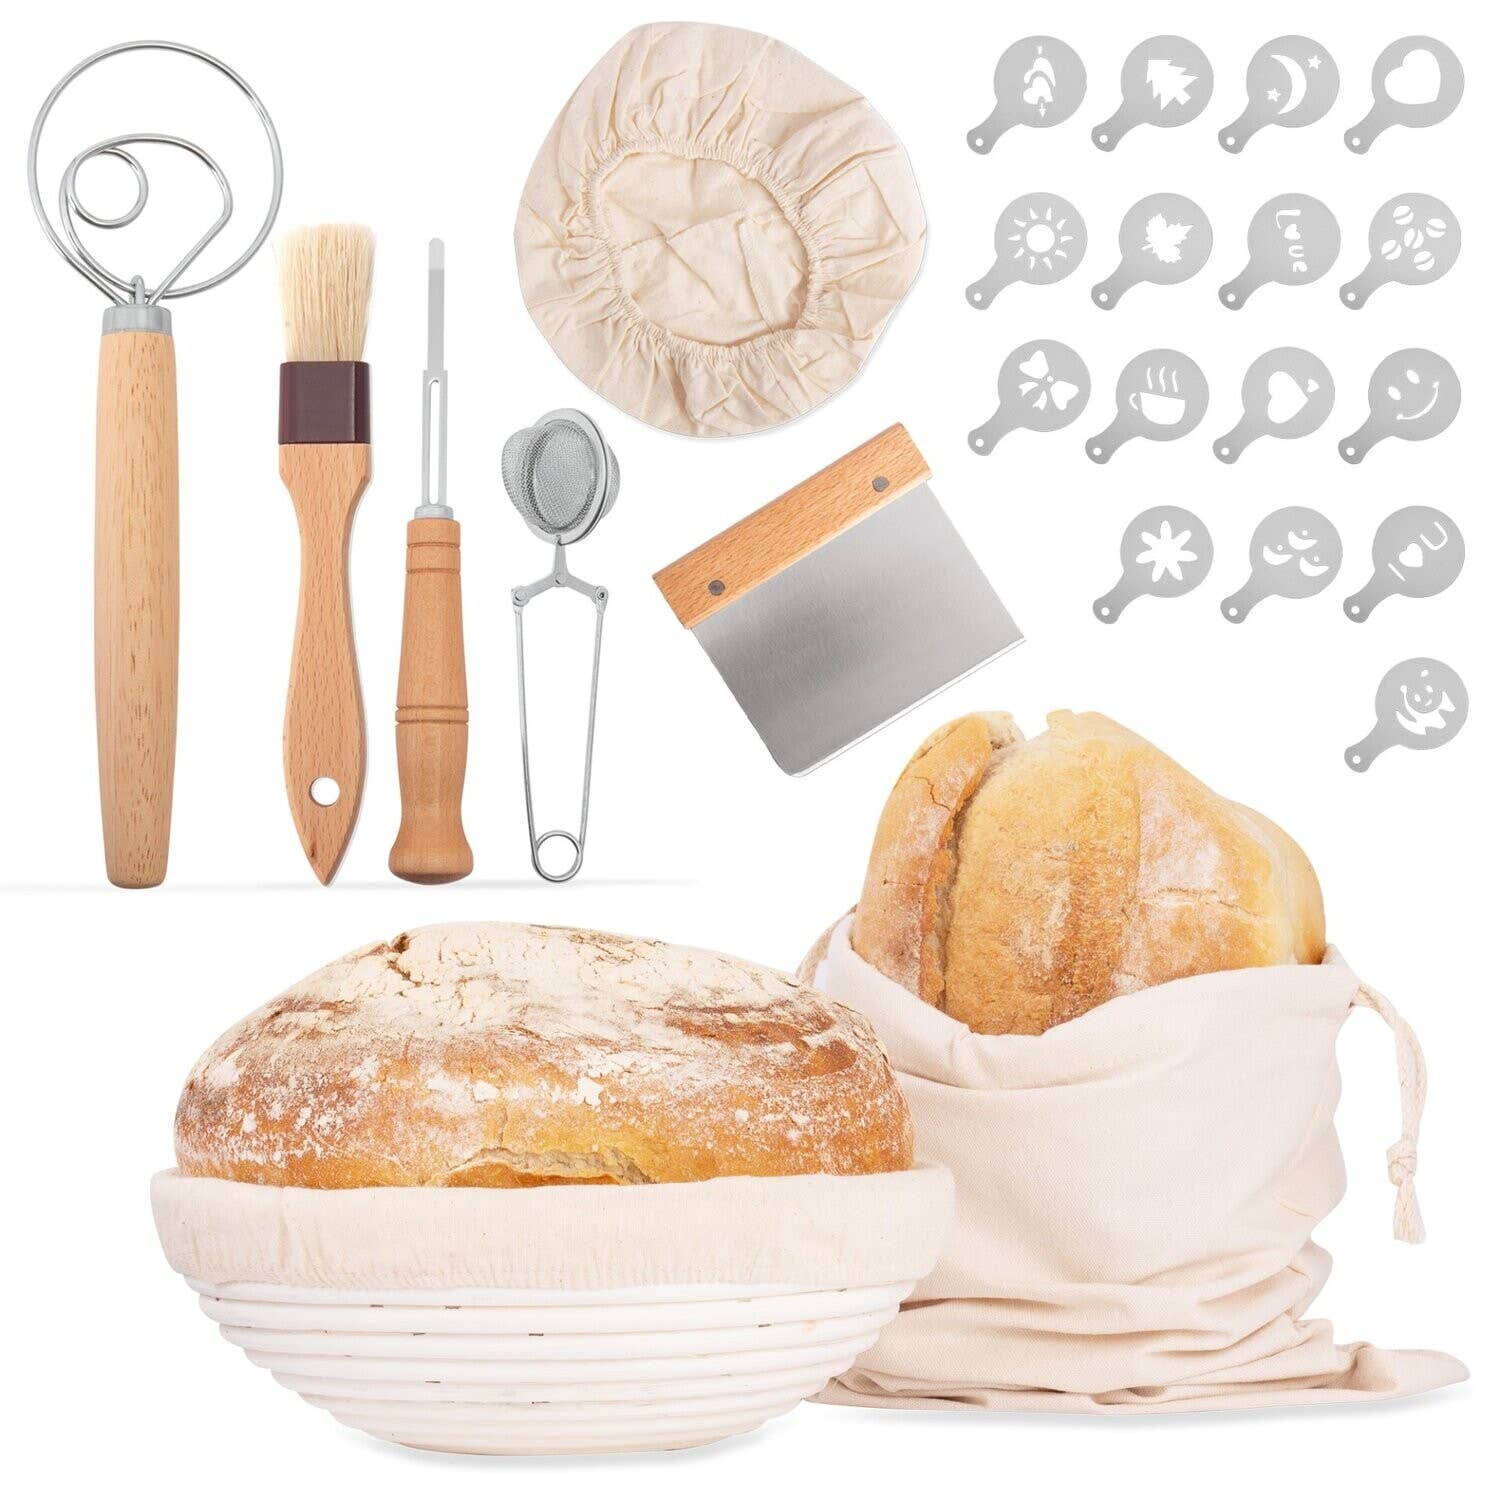 FarmSteady Sourdough Bread Making Kit